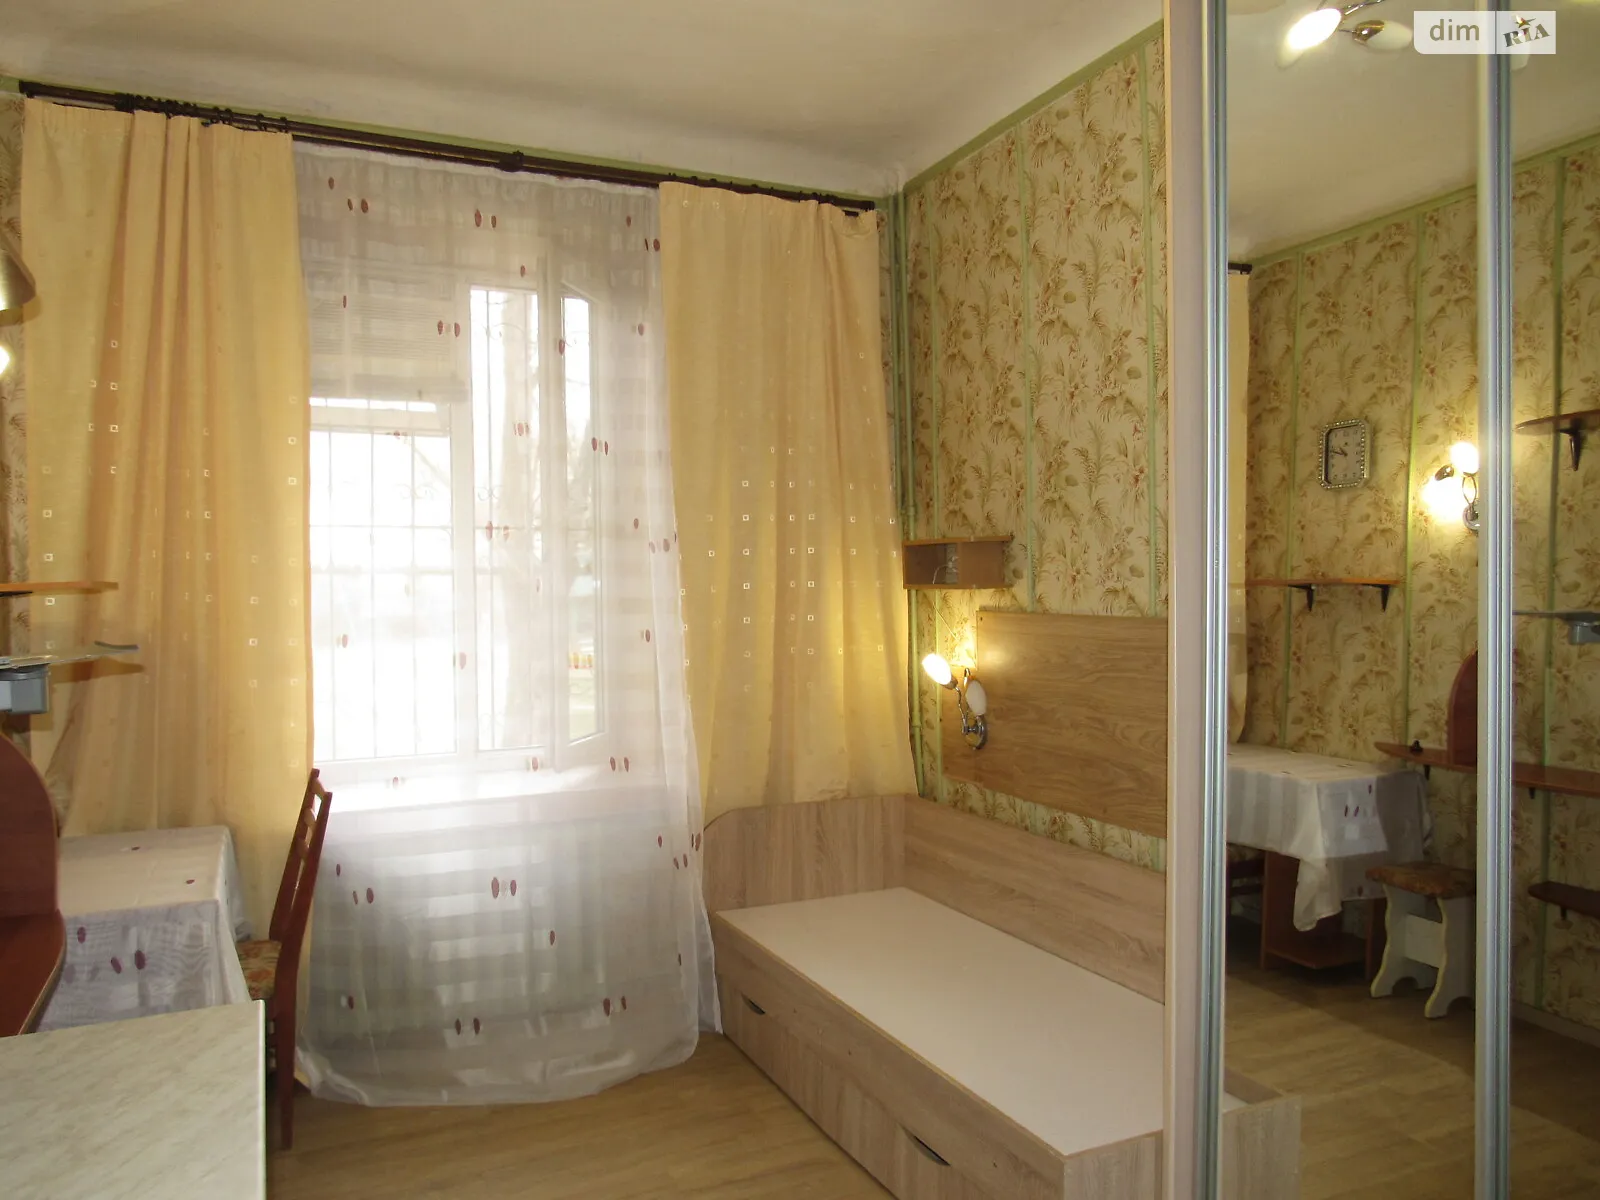 Продается комната 15 кв. м в Николаеве - фото 2